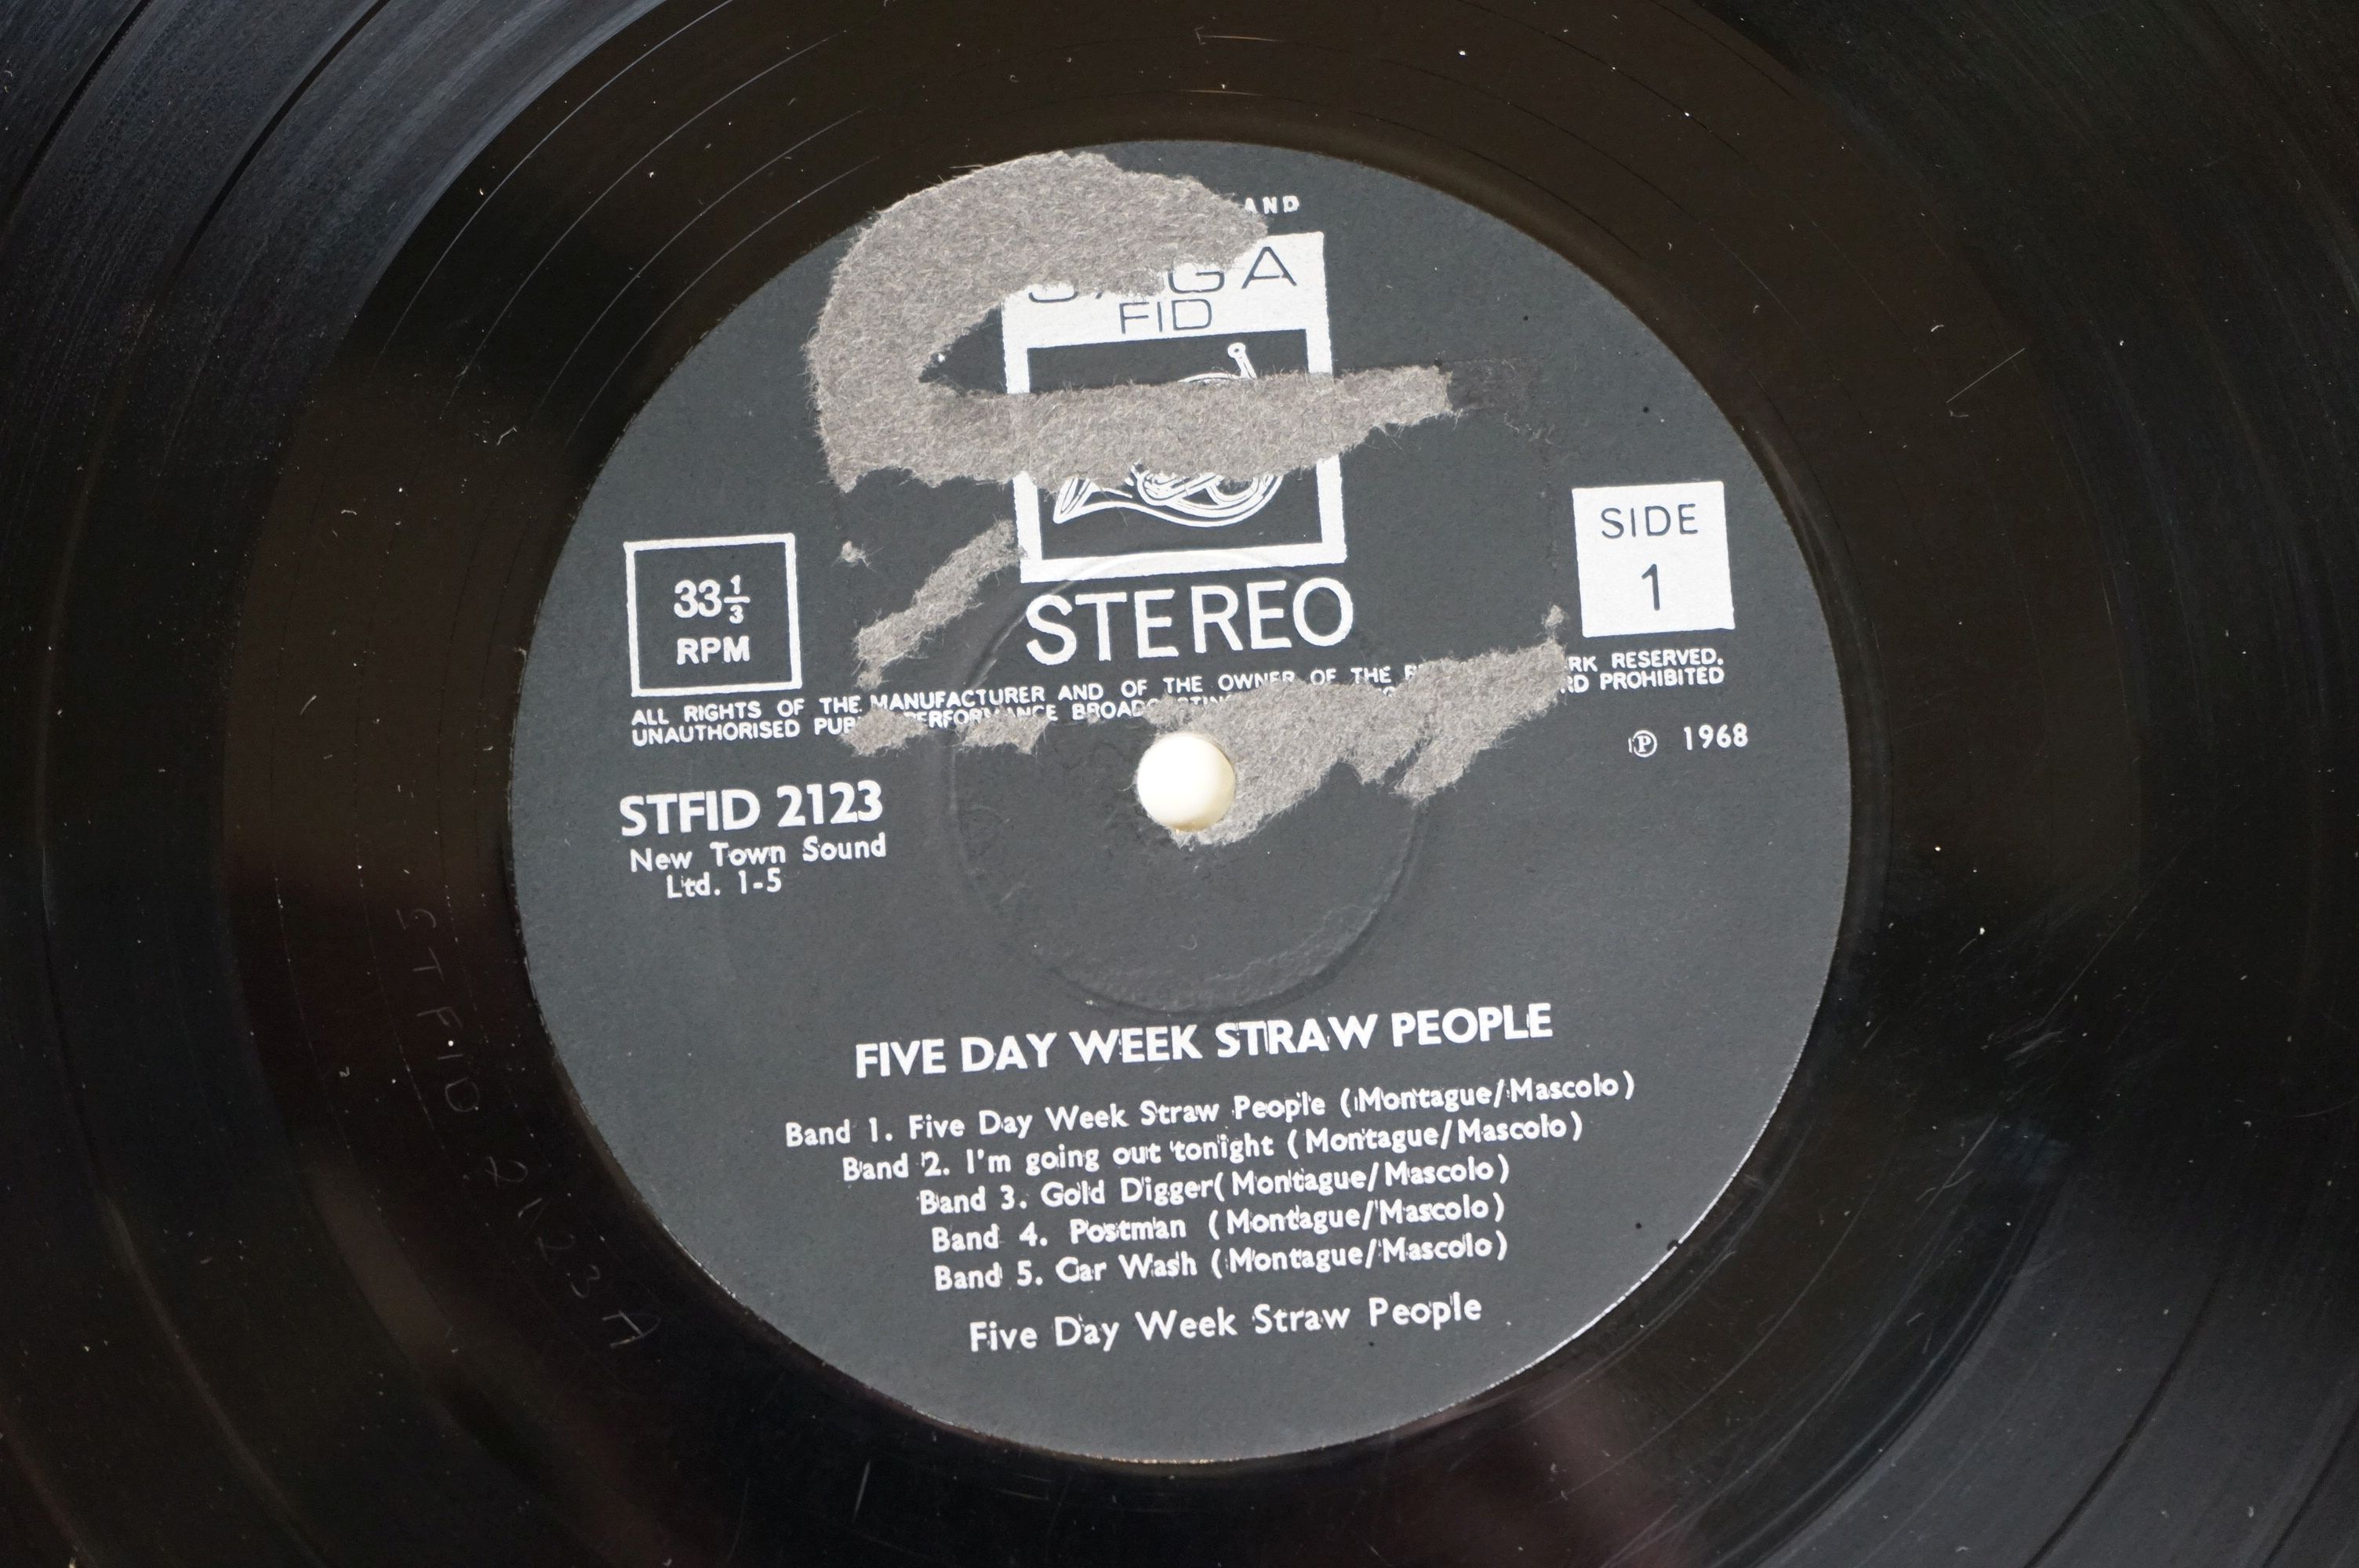 Vinyl - Five Day Week Straw People self titled LP SAGA, STFID 2123 with original Saga inner, label - Image 4 of 4